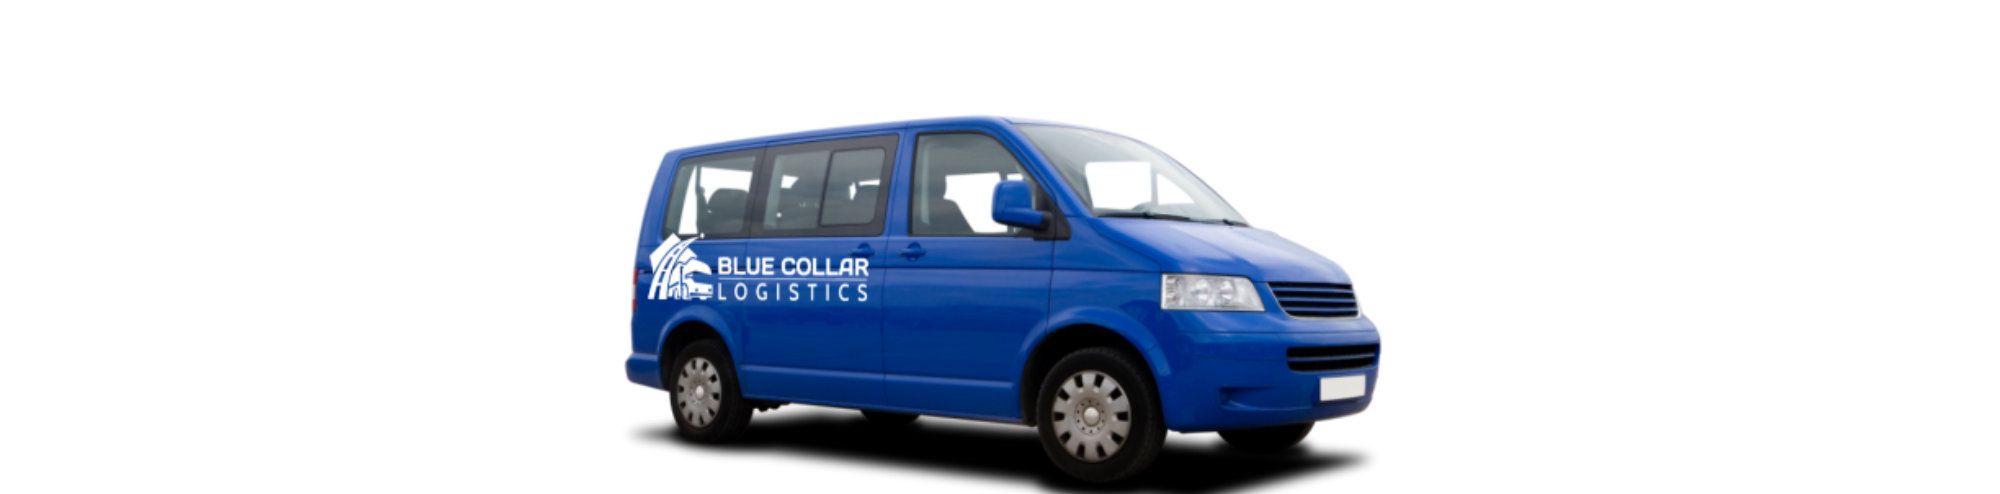 Passenger blue Vans